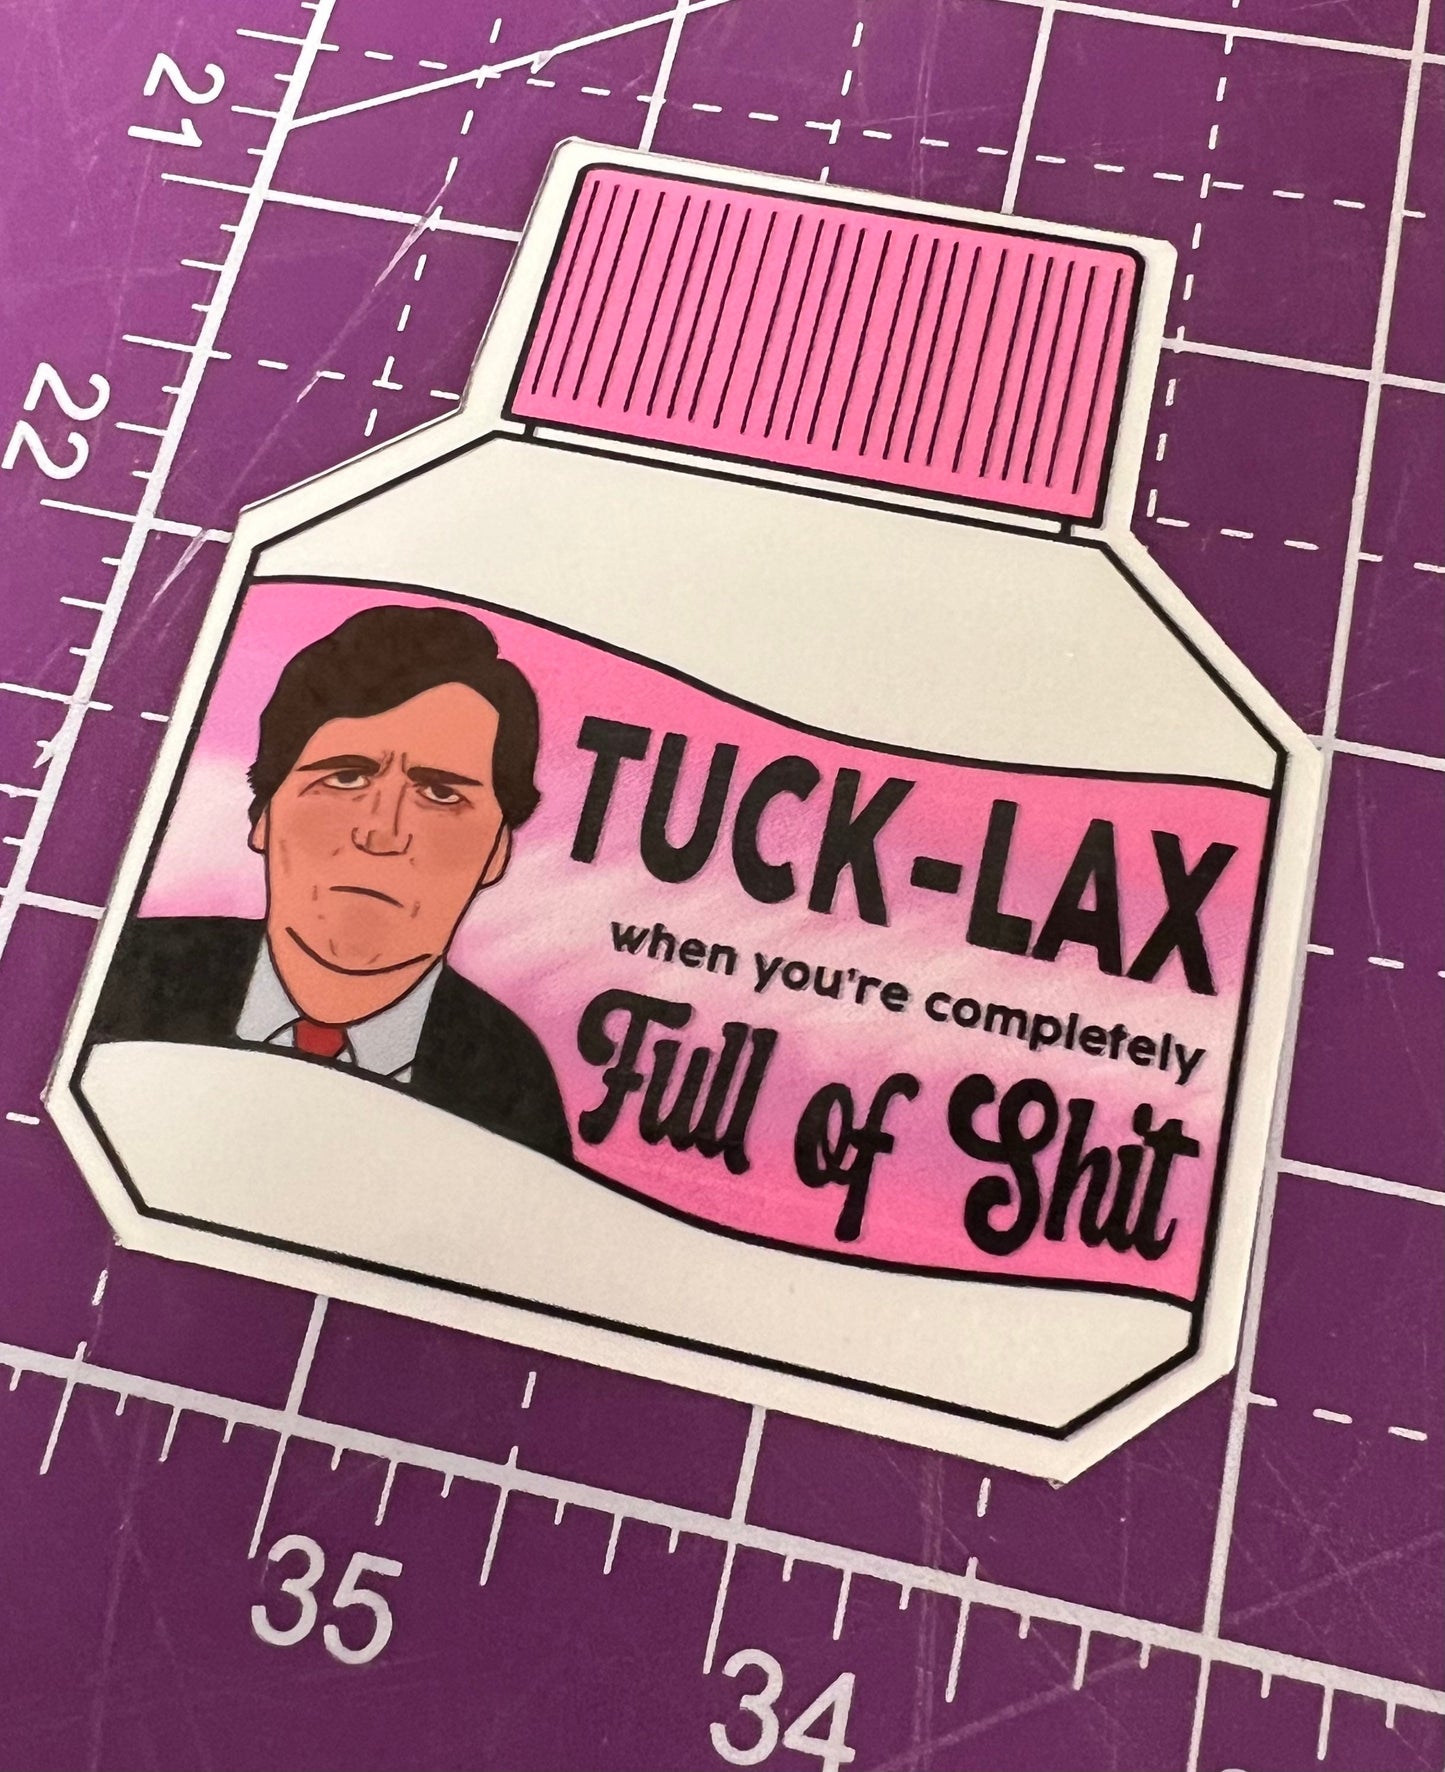 Tuck-Lax Tucker Carlson is Full of Shit Sticker